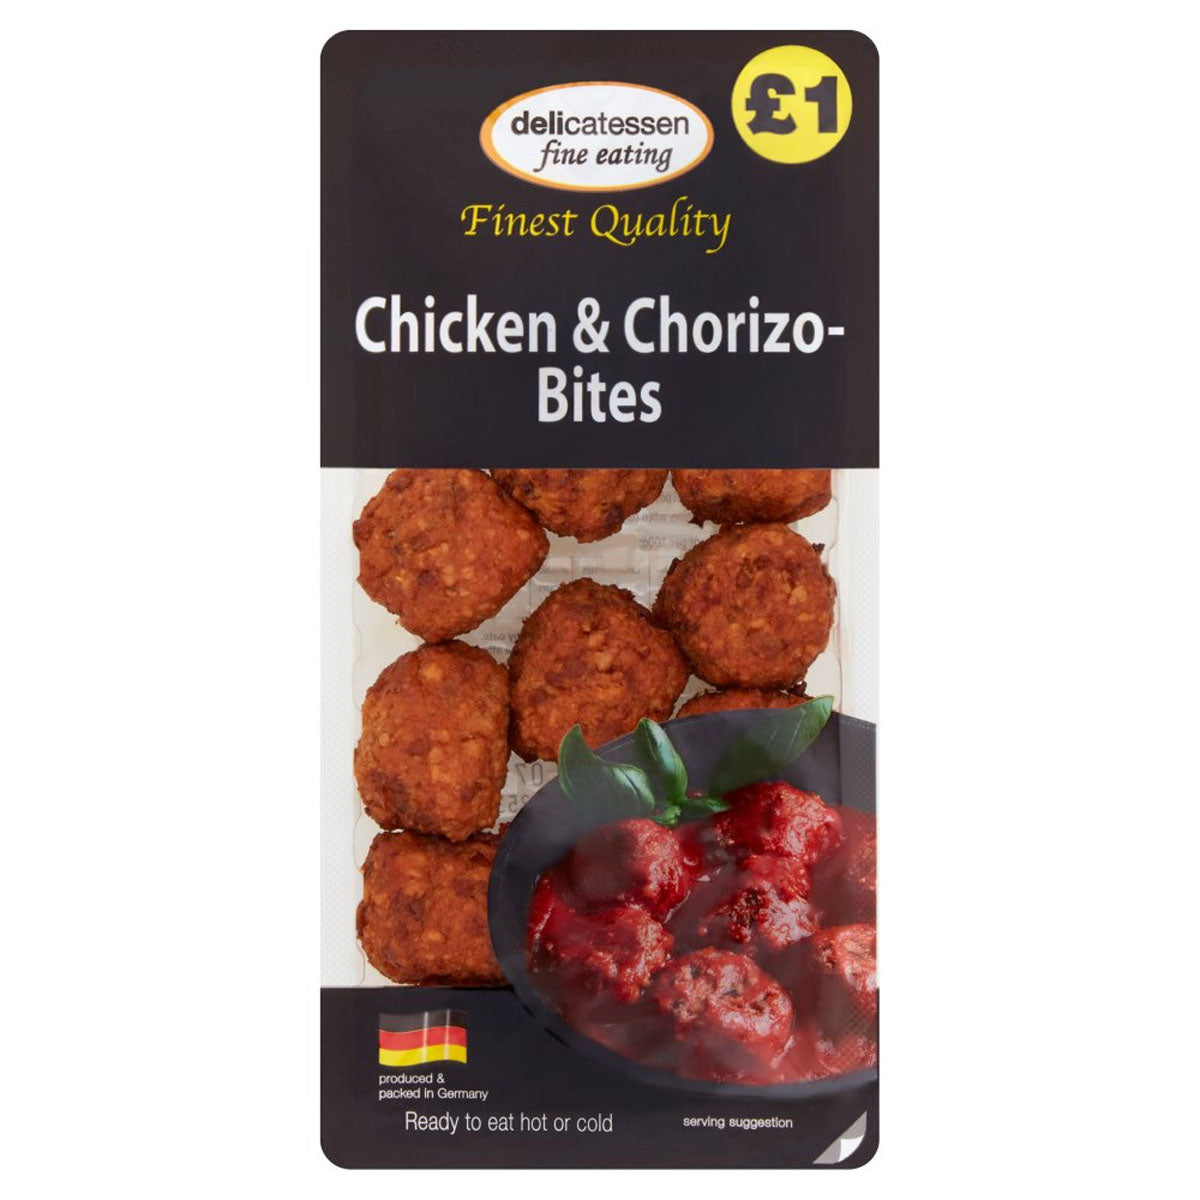 Delicatessen Fine Eating - Chicken & Chorizo-Bites - 200g - Continental Food Store